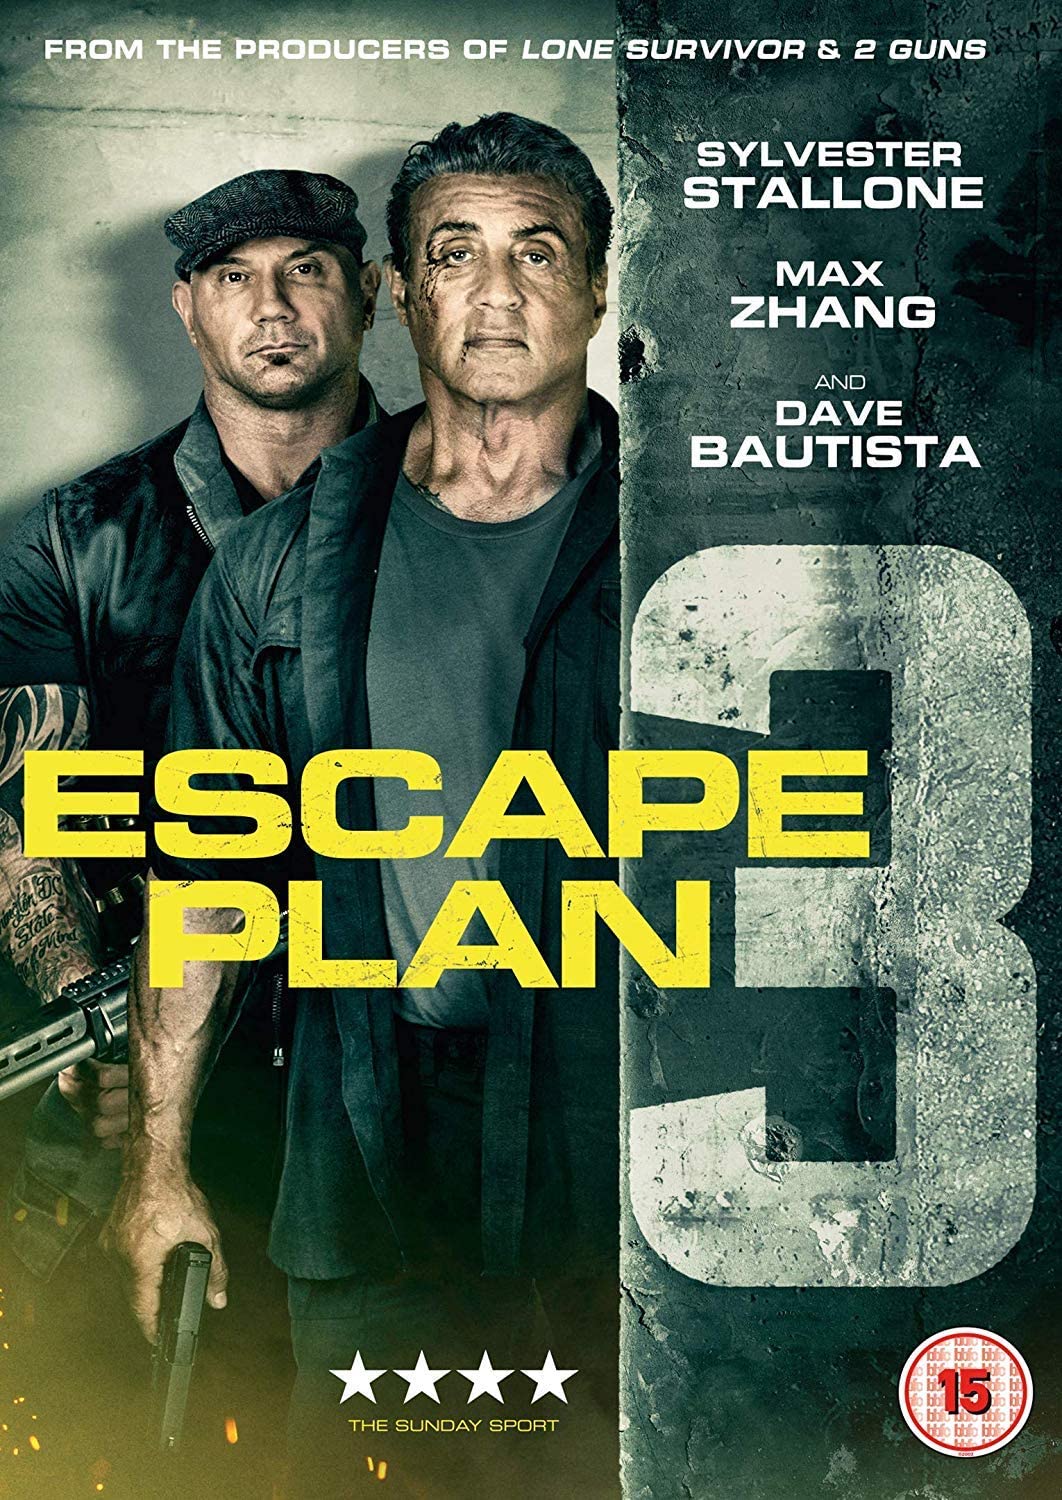 Escape Plan 3 - Action/Thriller  [DVD]